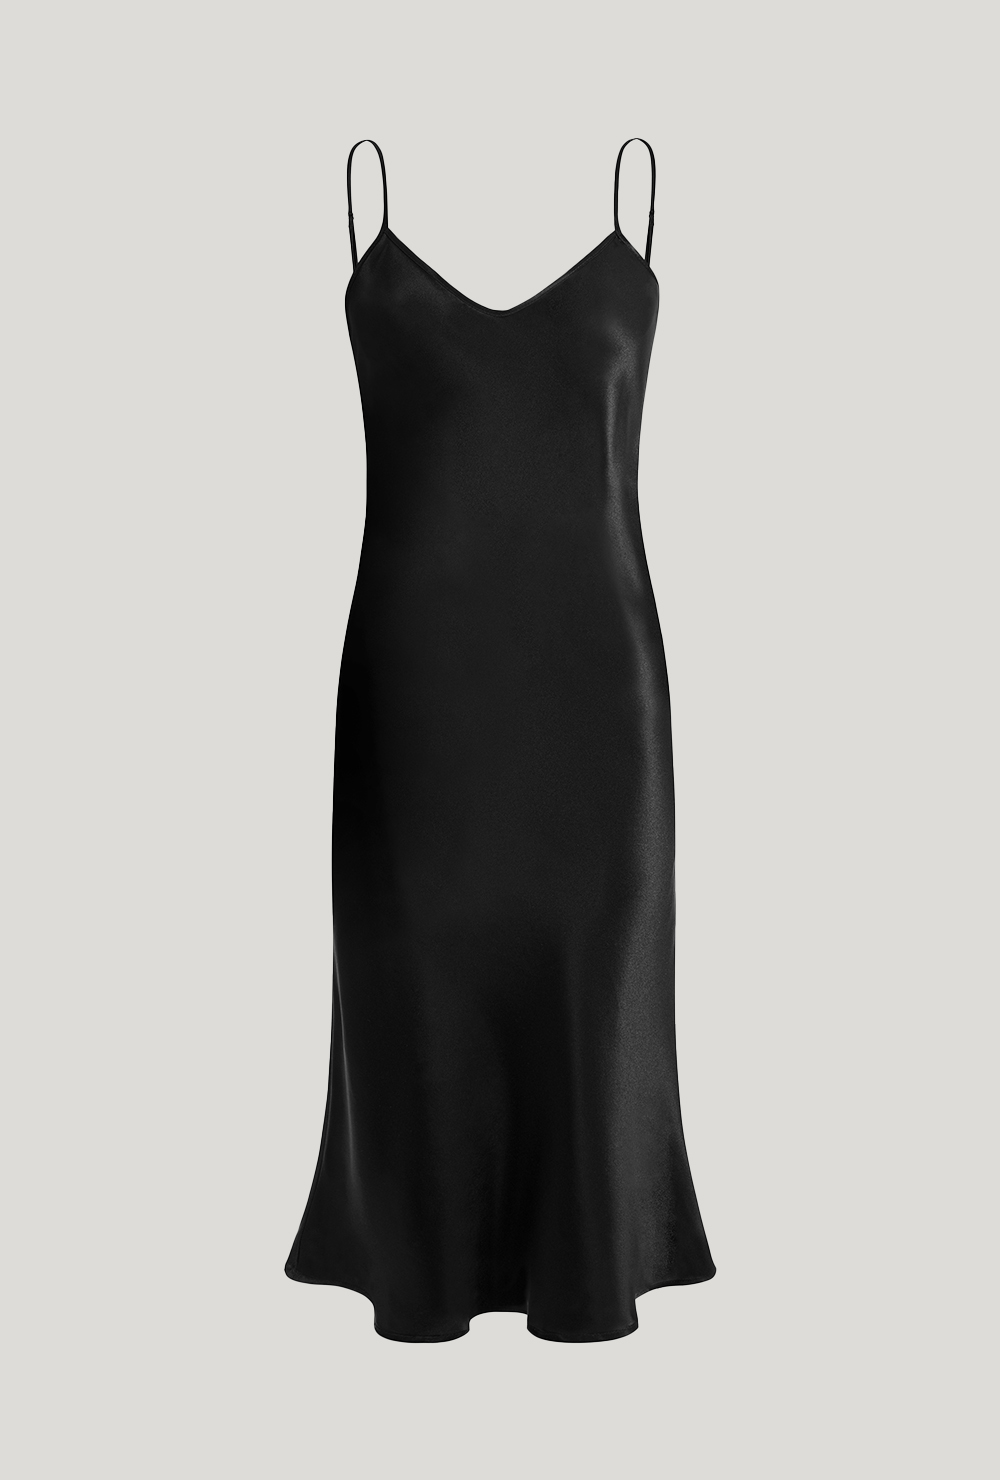 Black midi slip dress